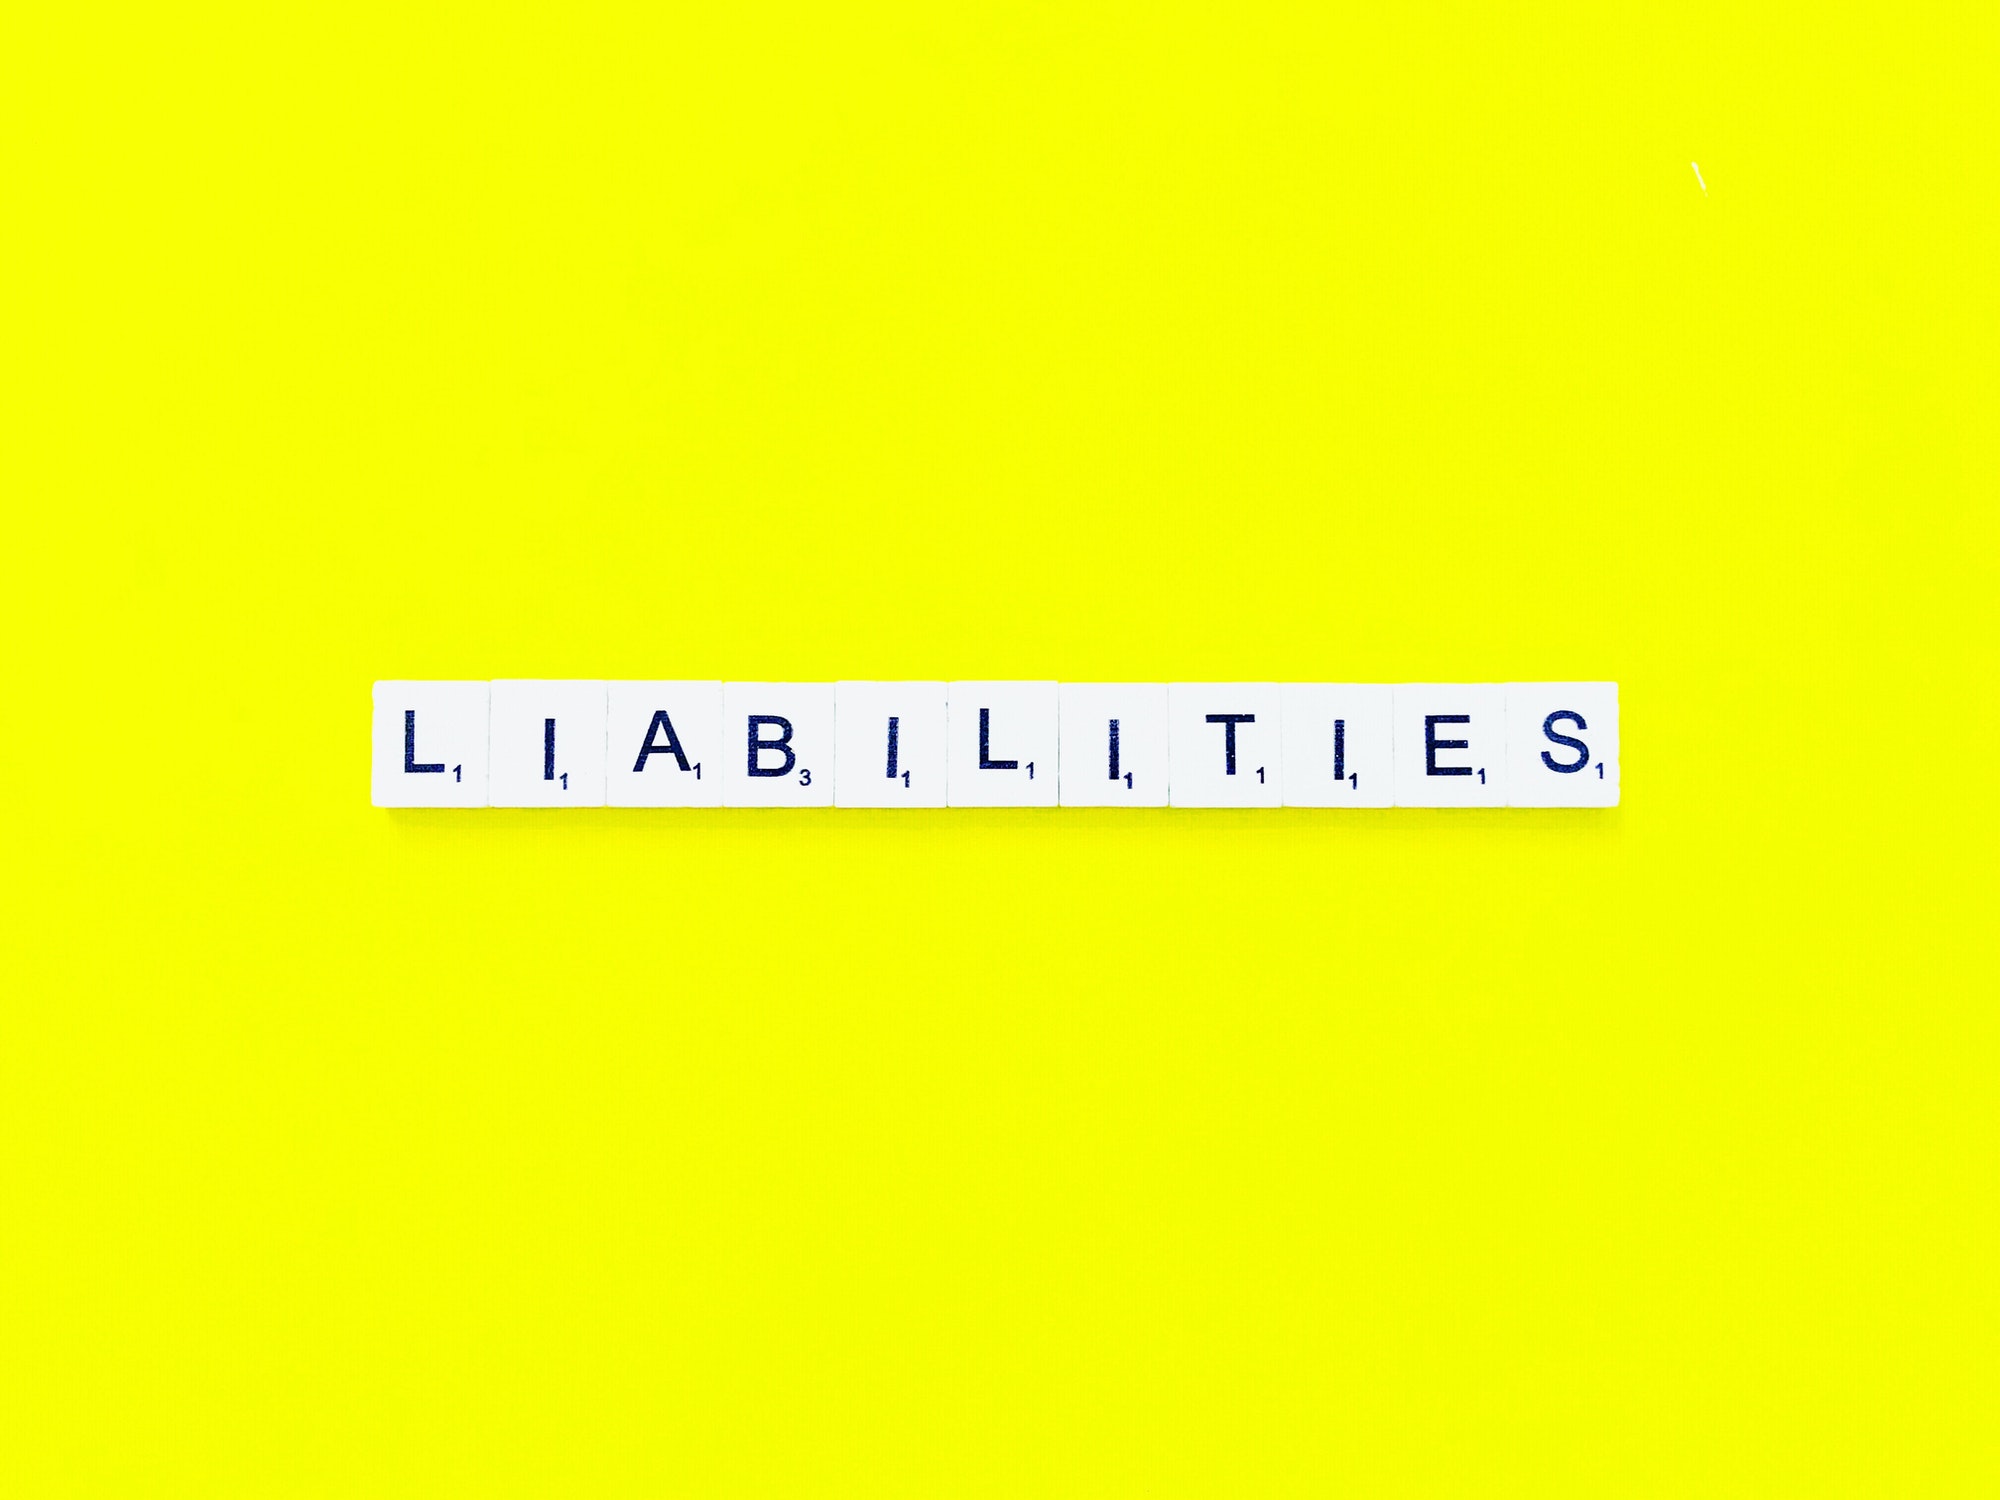 Liabilities